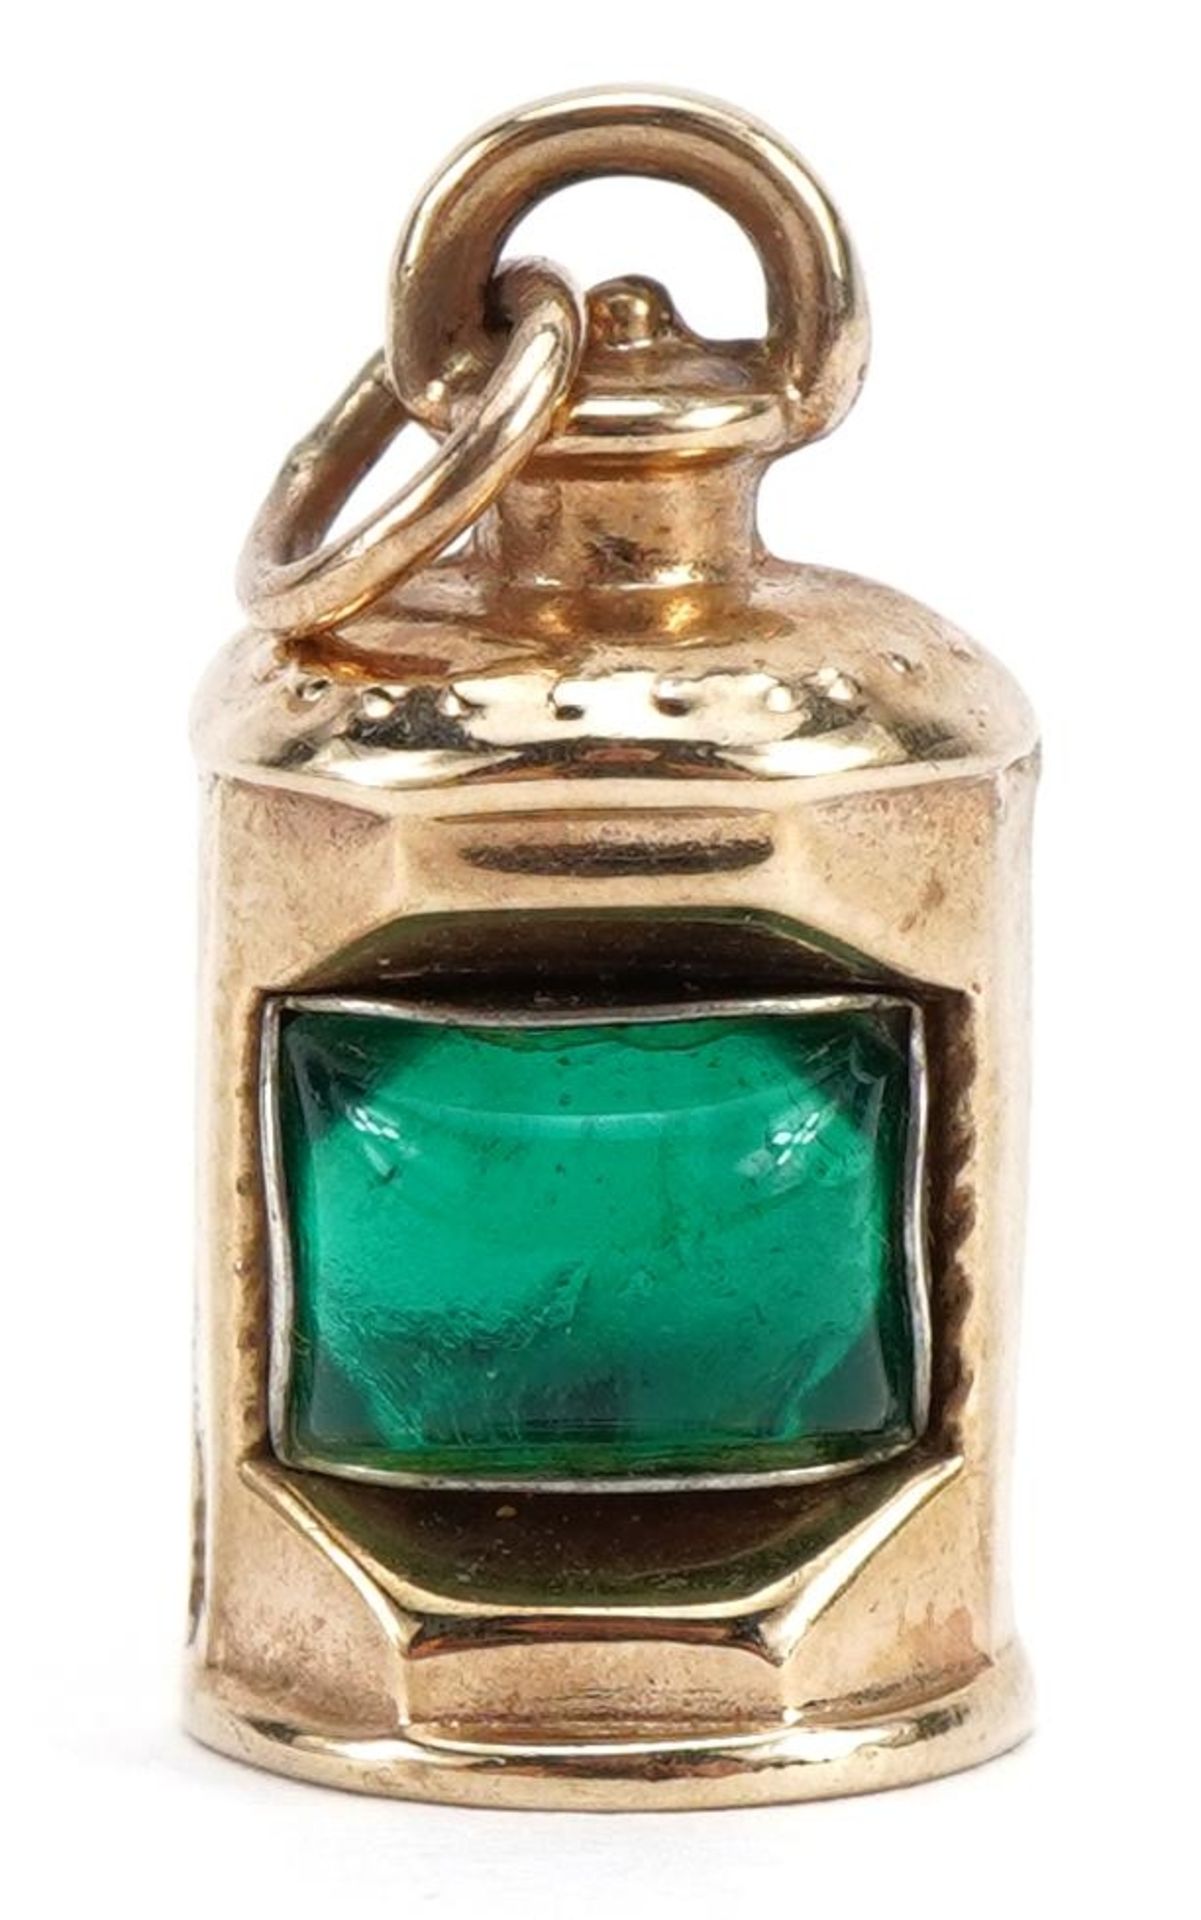 9ct gold lantern charm set with a green stone, 1.9cm high, 1.6g